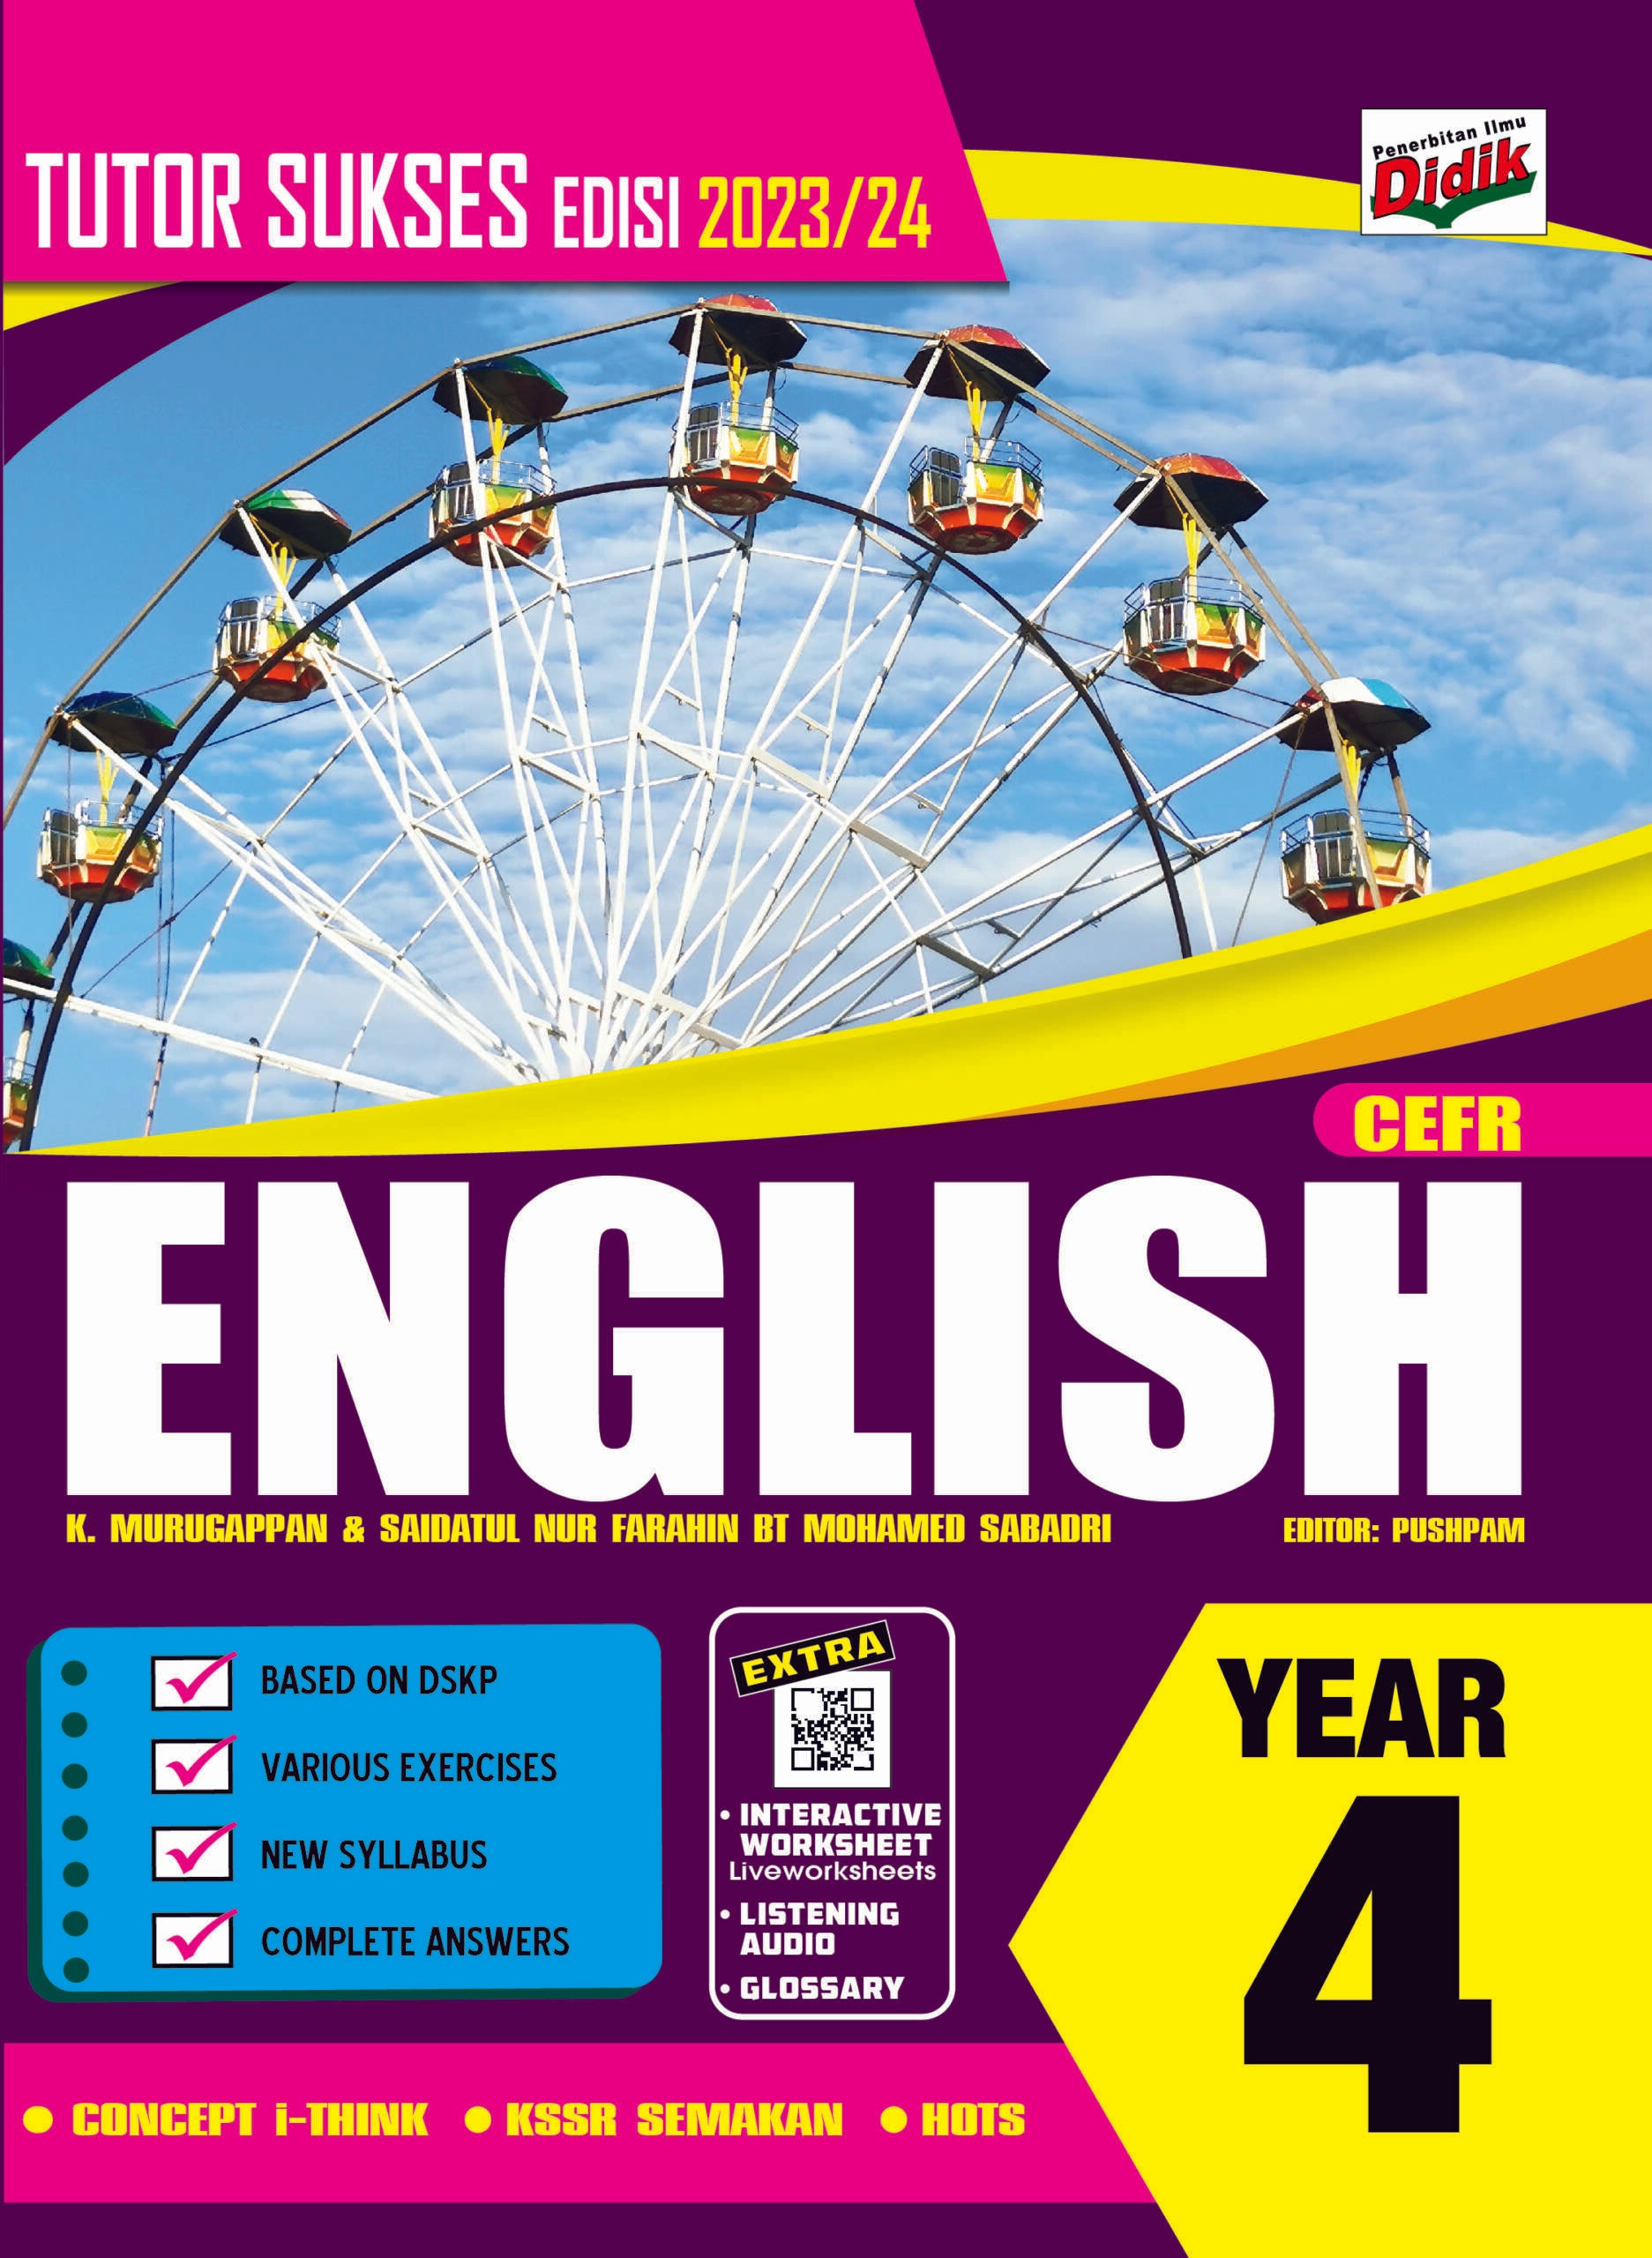 tutor-sukses-edisi-2023-24-english-year-4-mphonline